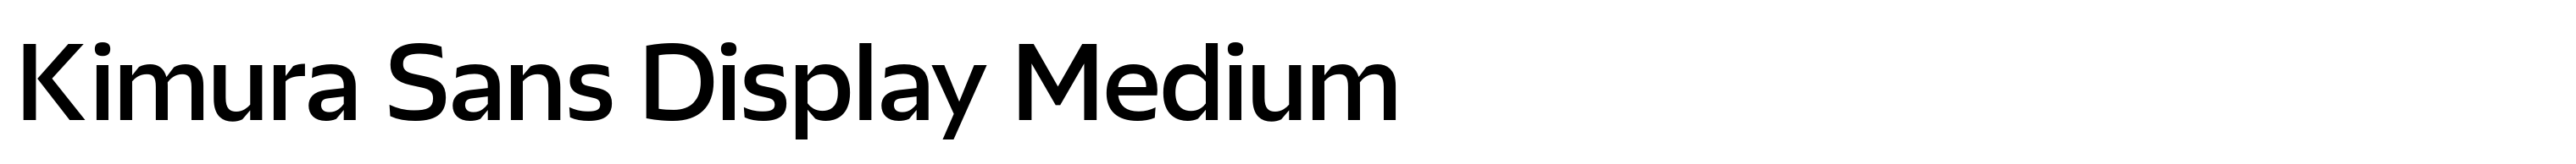 Kimura Sans Display Medium